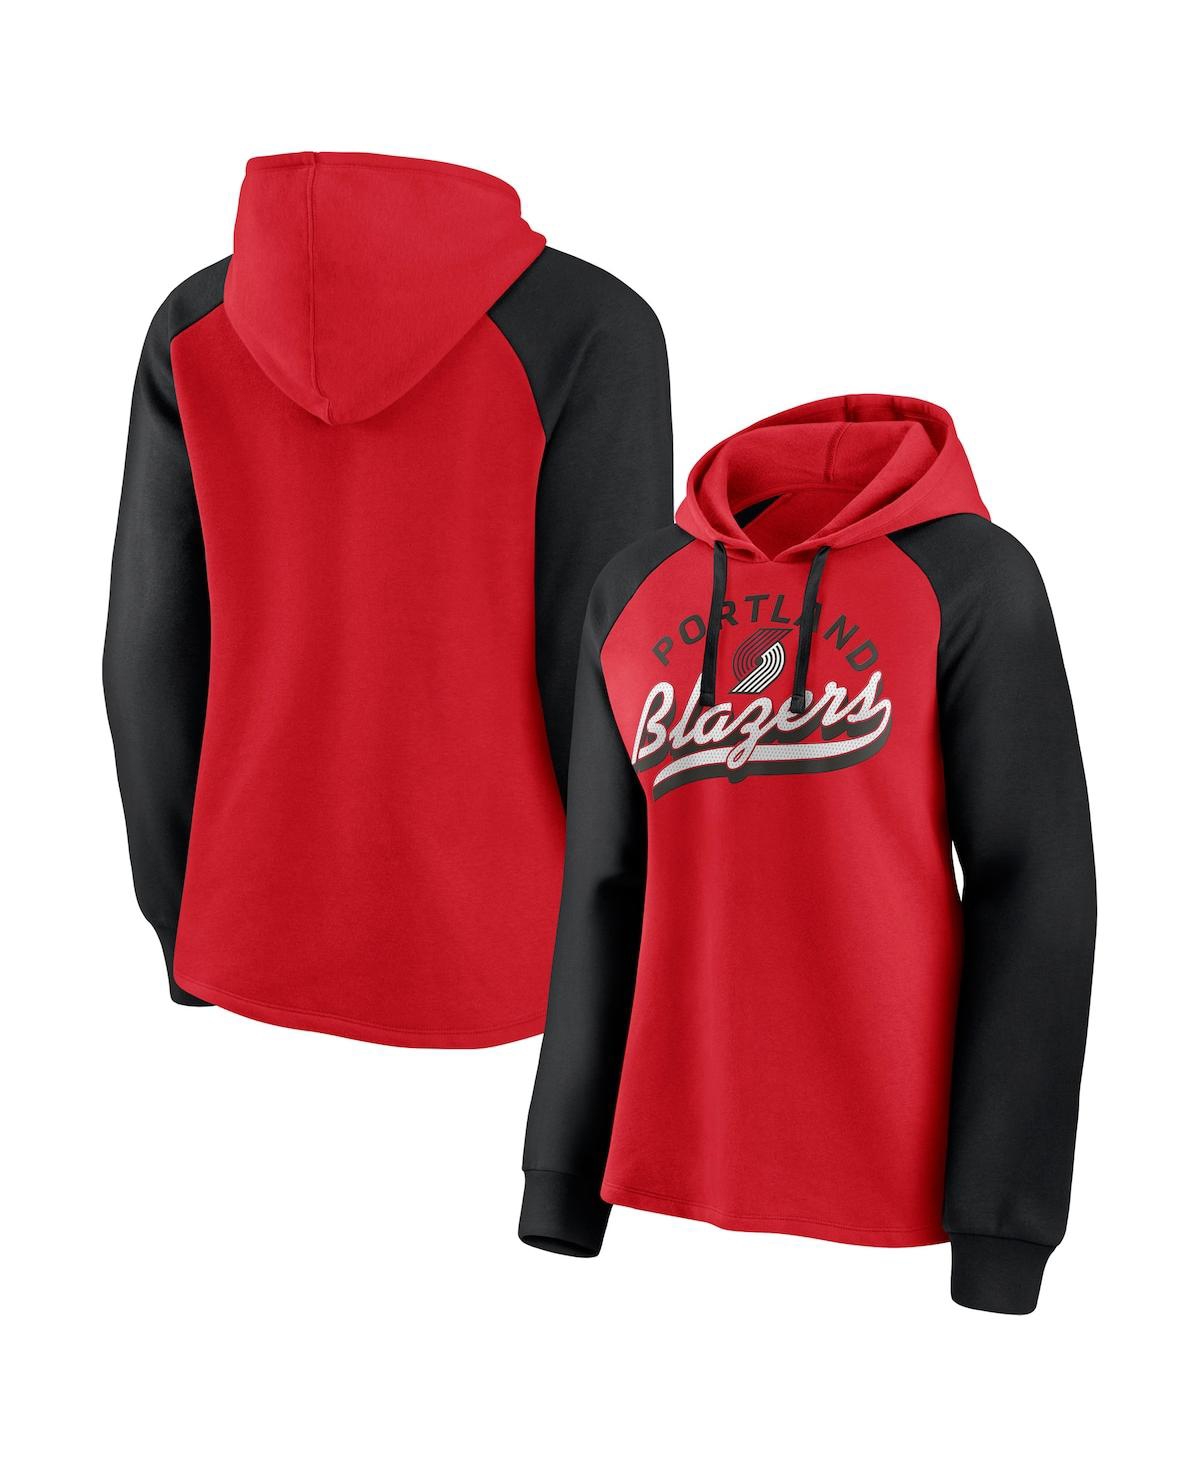 Women's Fanatics Red and Black Portland Trail Blazers Record Holder Raglan Pullover Hoodie - Red, Black